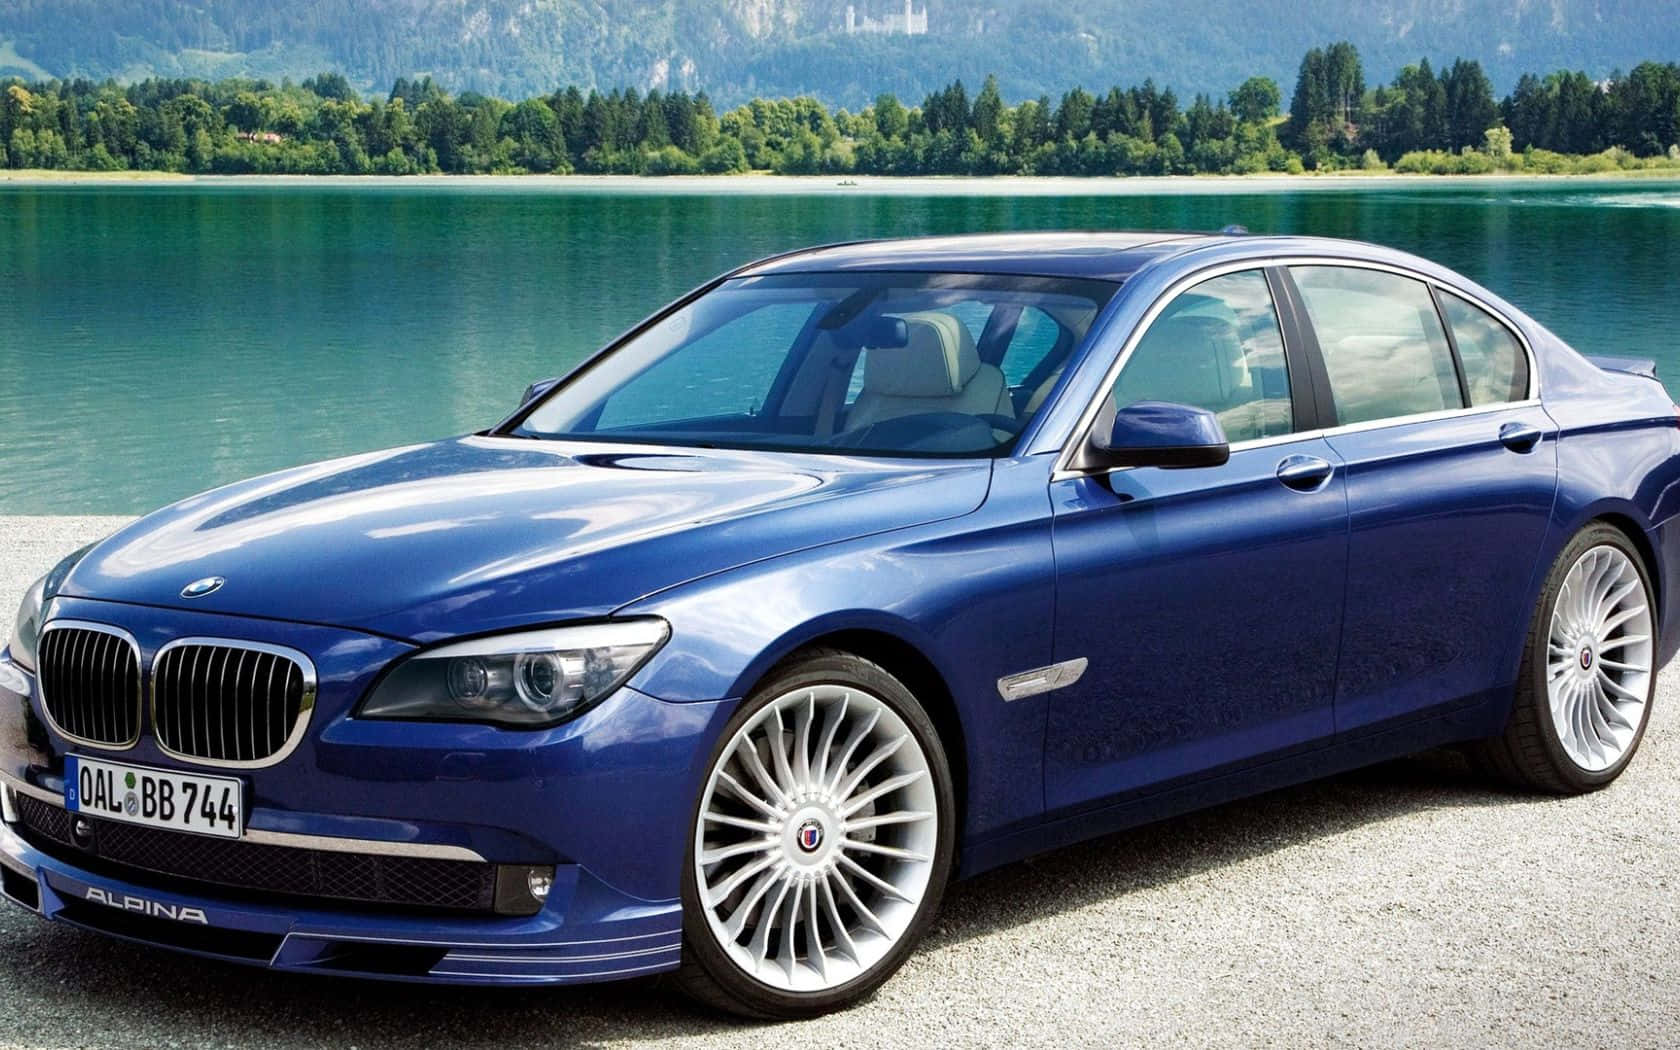 BMW - Luxury Auto Performance Wallpaper